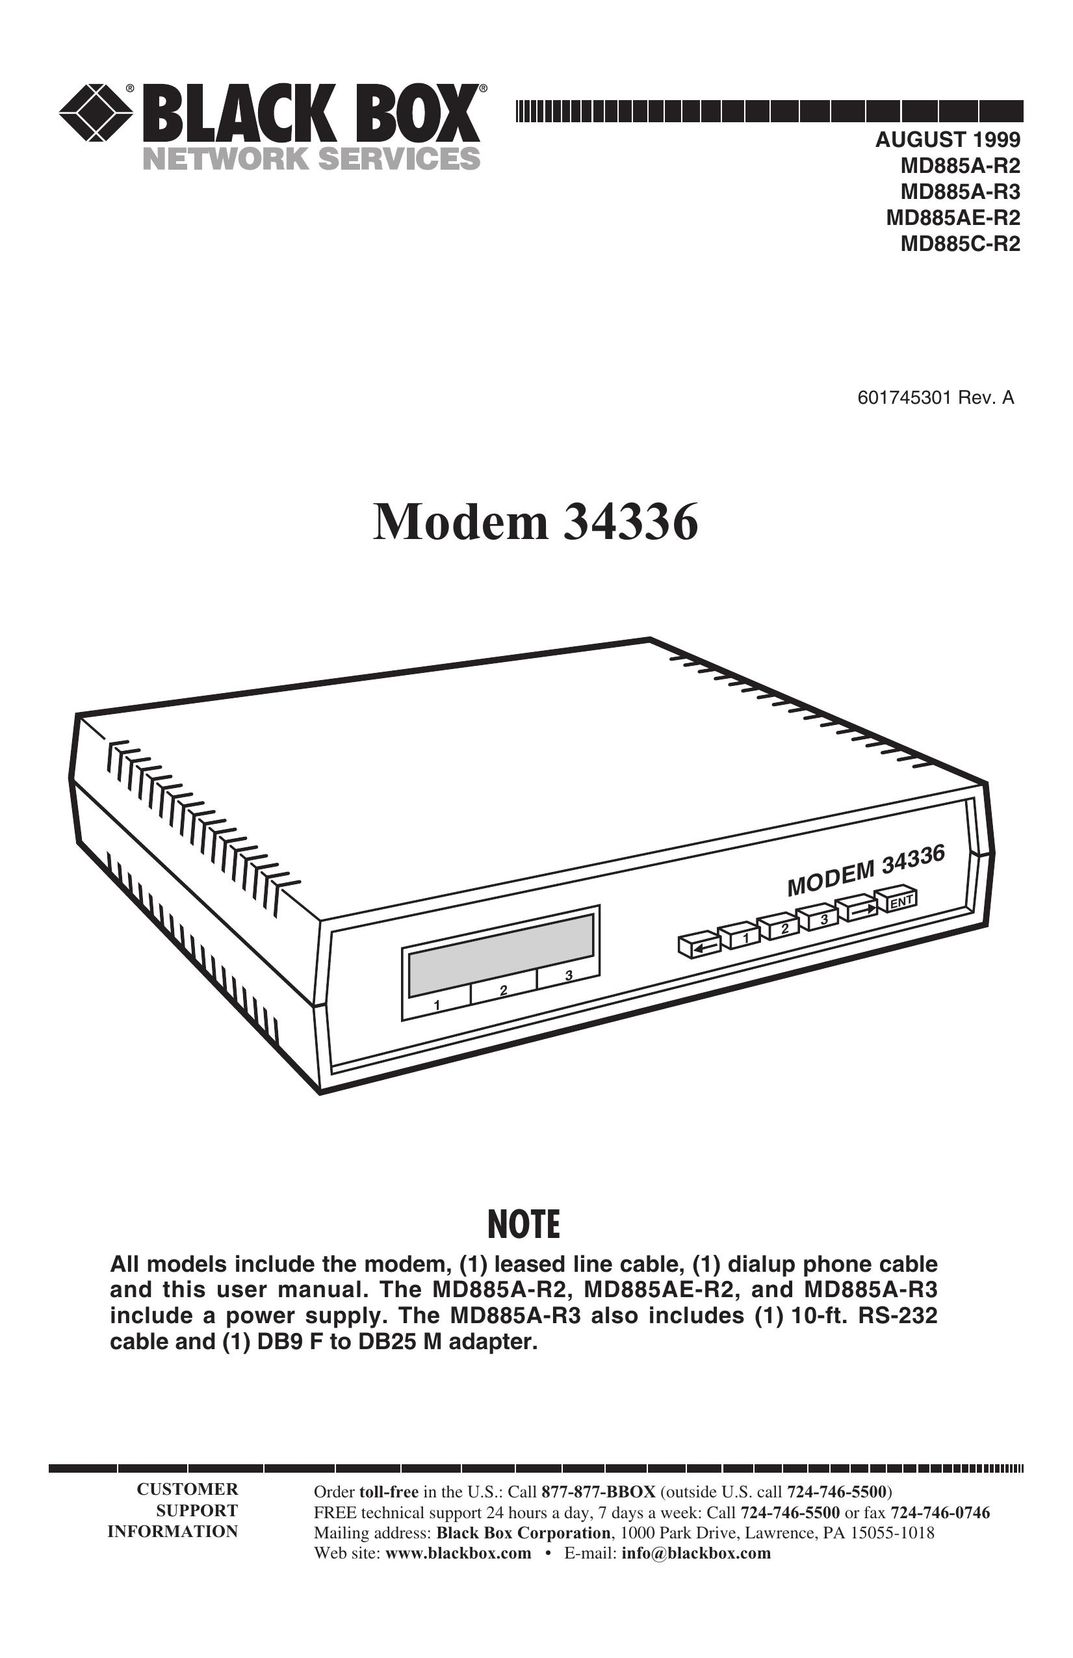 Black Box MD885C-R2 Modem User Manual